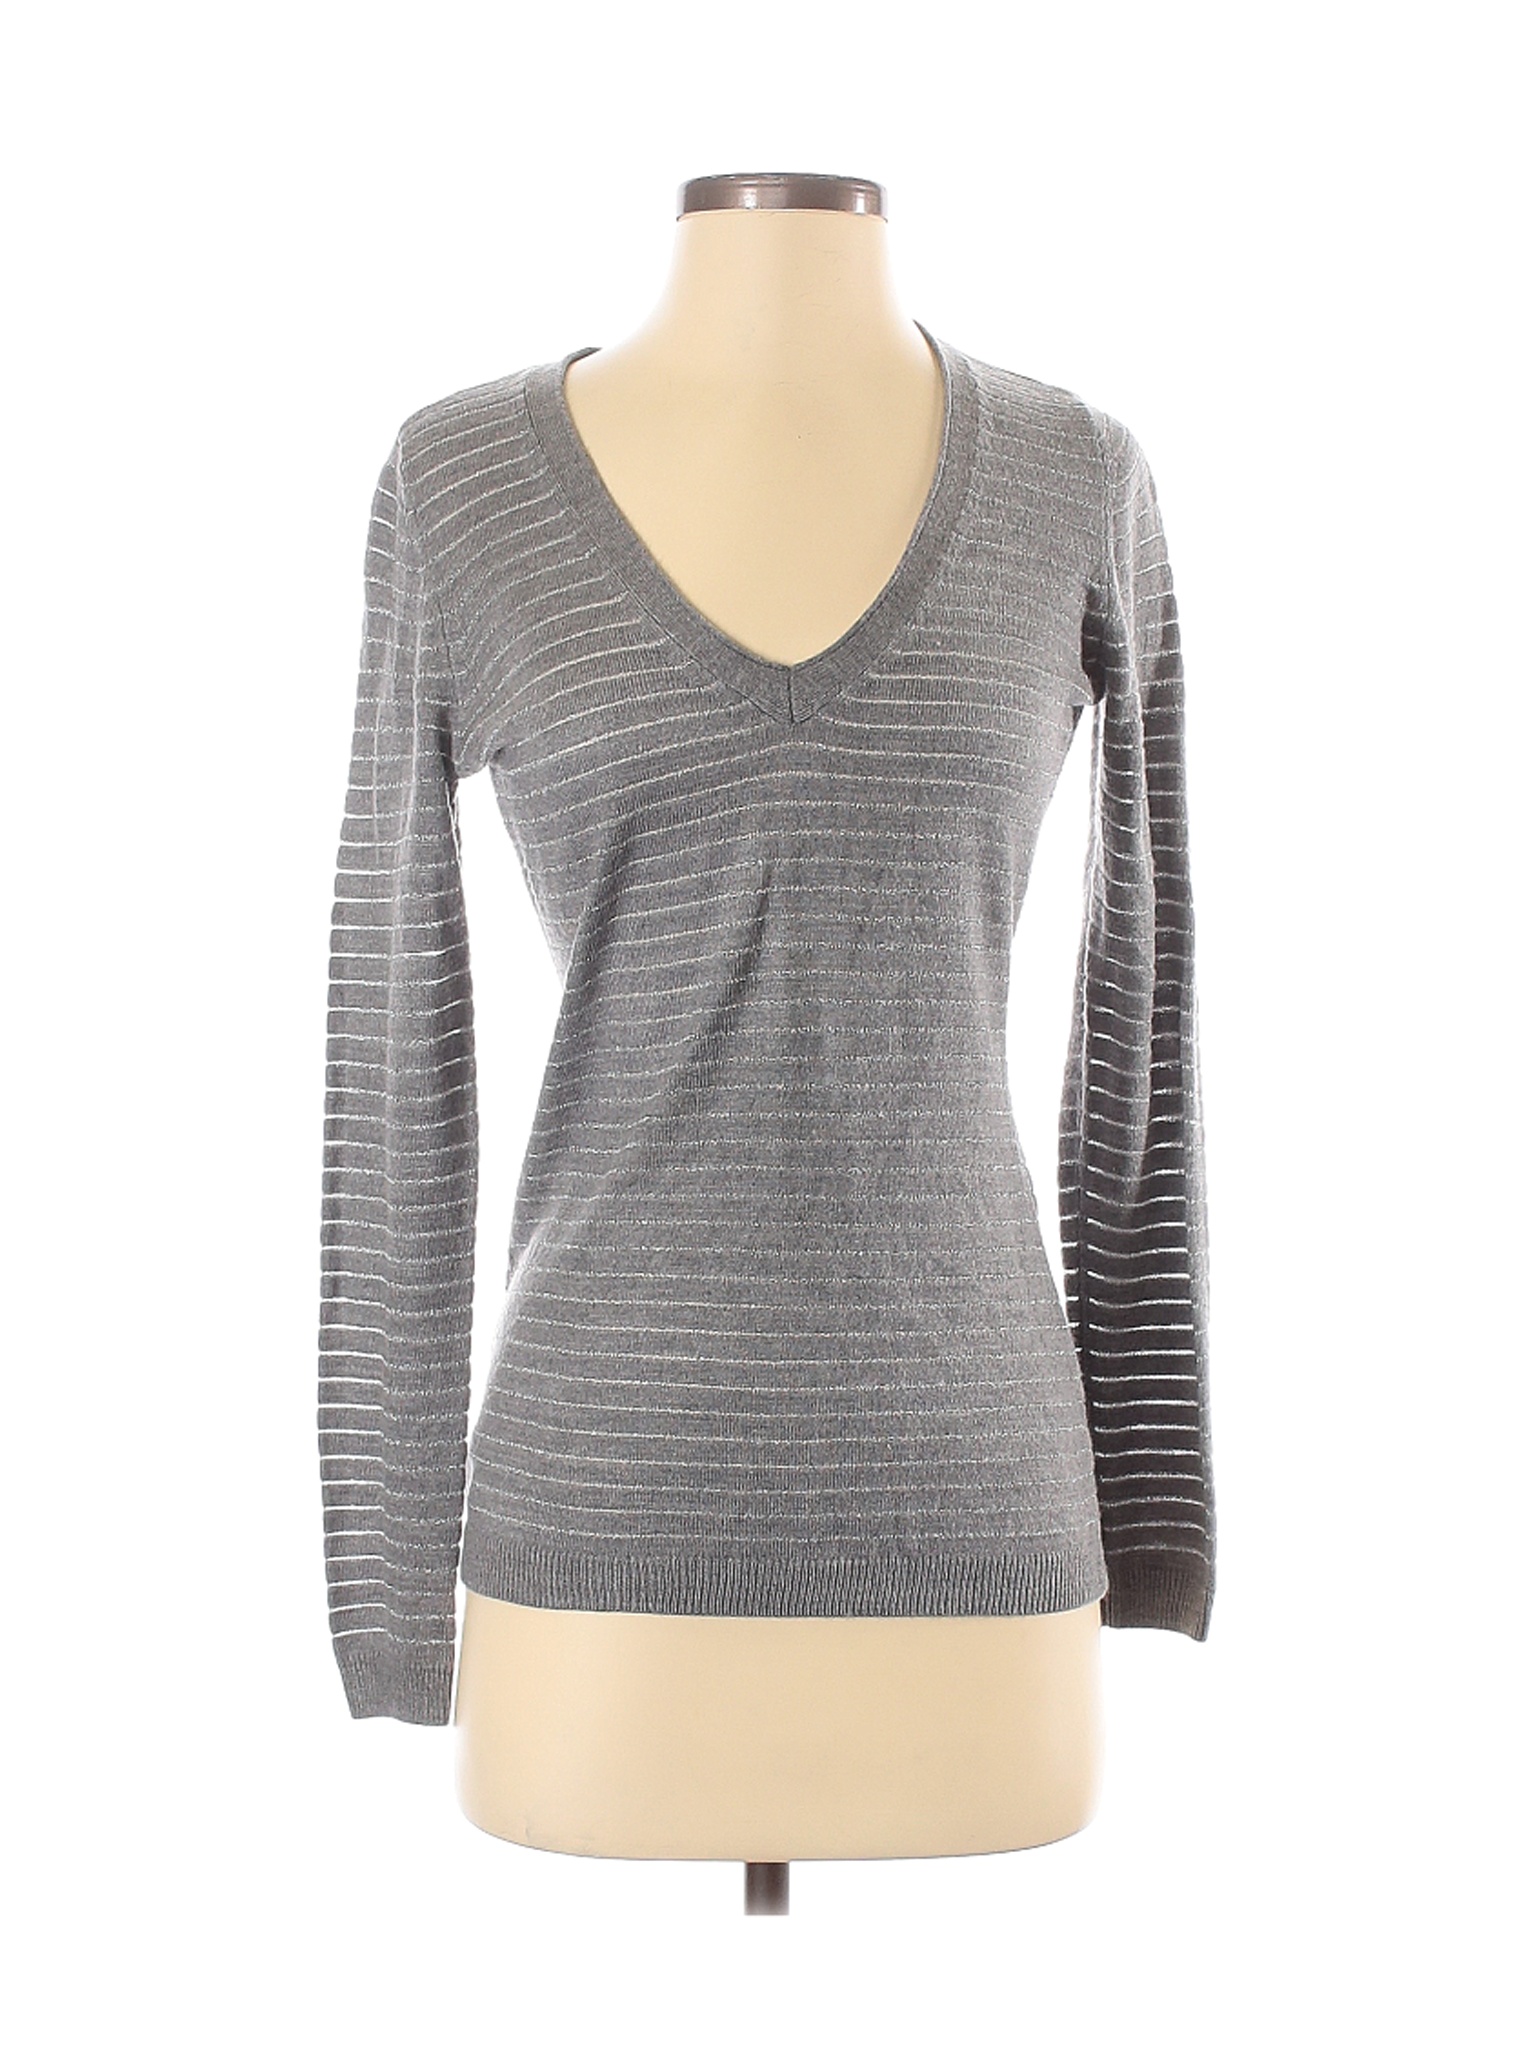 New York & Company Women Gray Pullover Sweater S | eBay